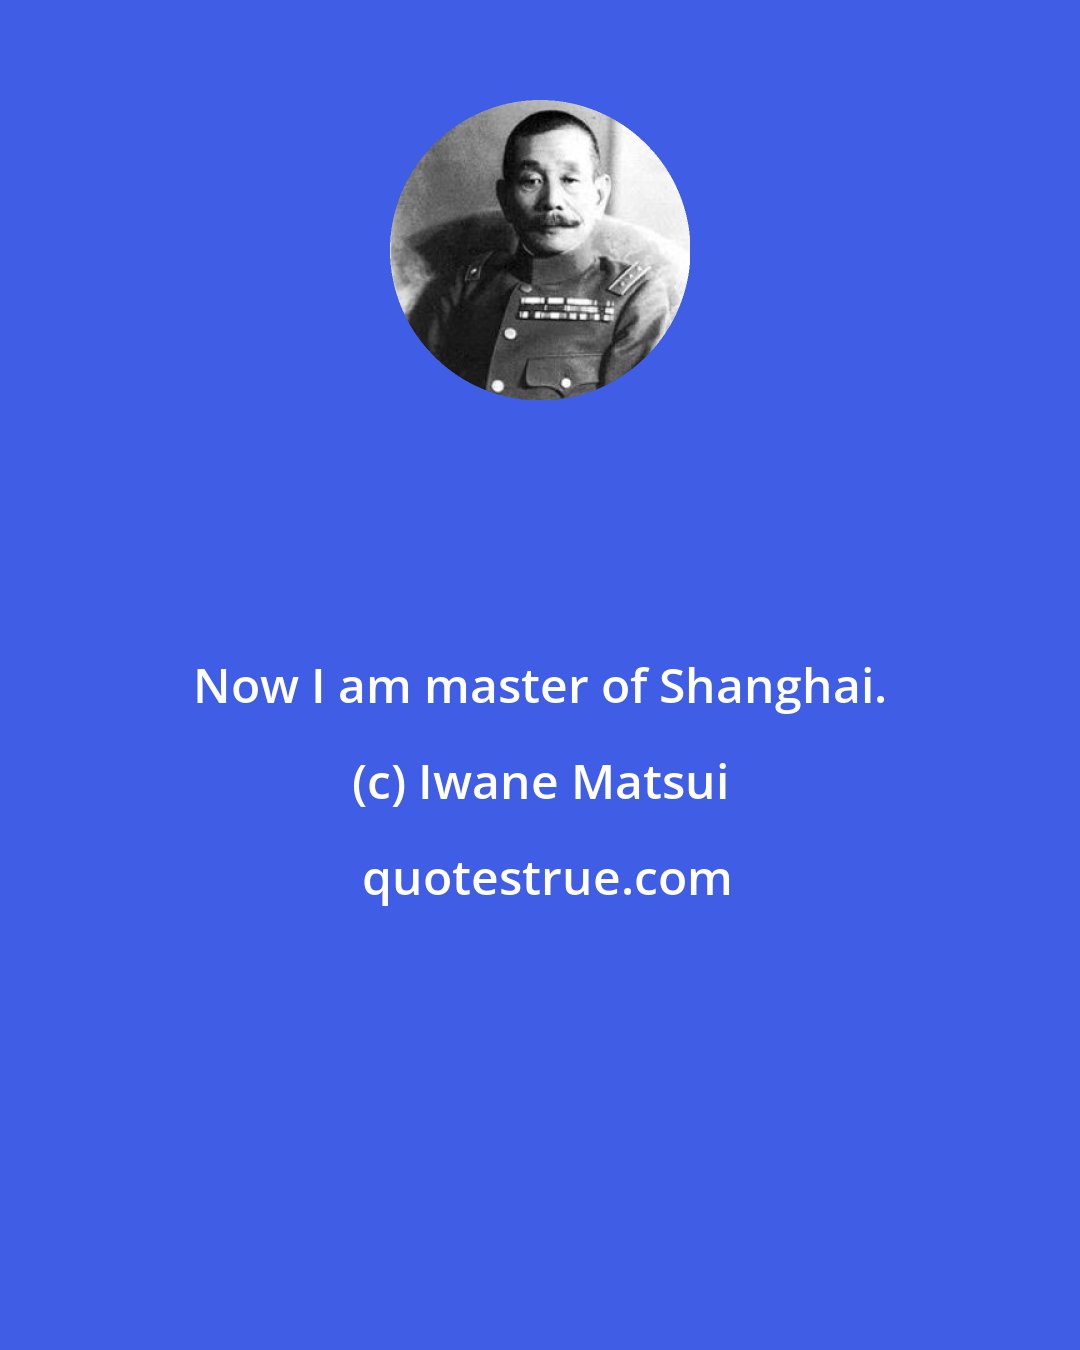 Iwane Matsui: Now I am master of Shanghai.